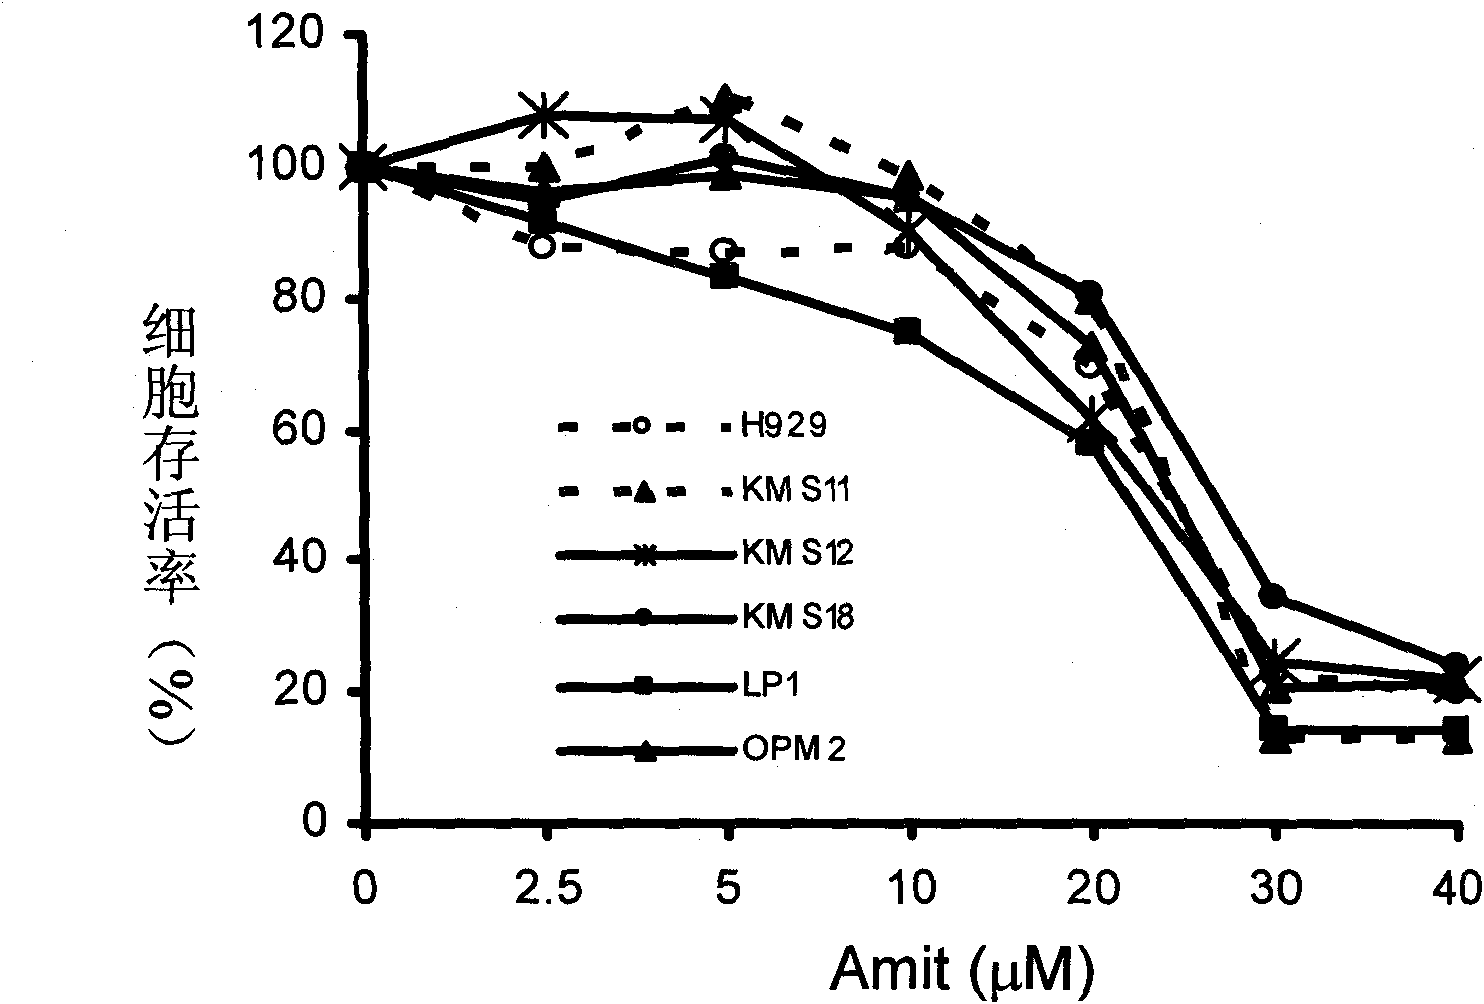 Application of amitriptyline